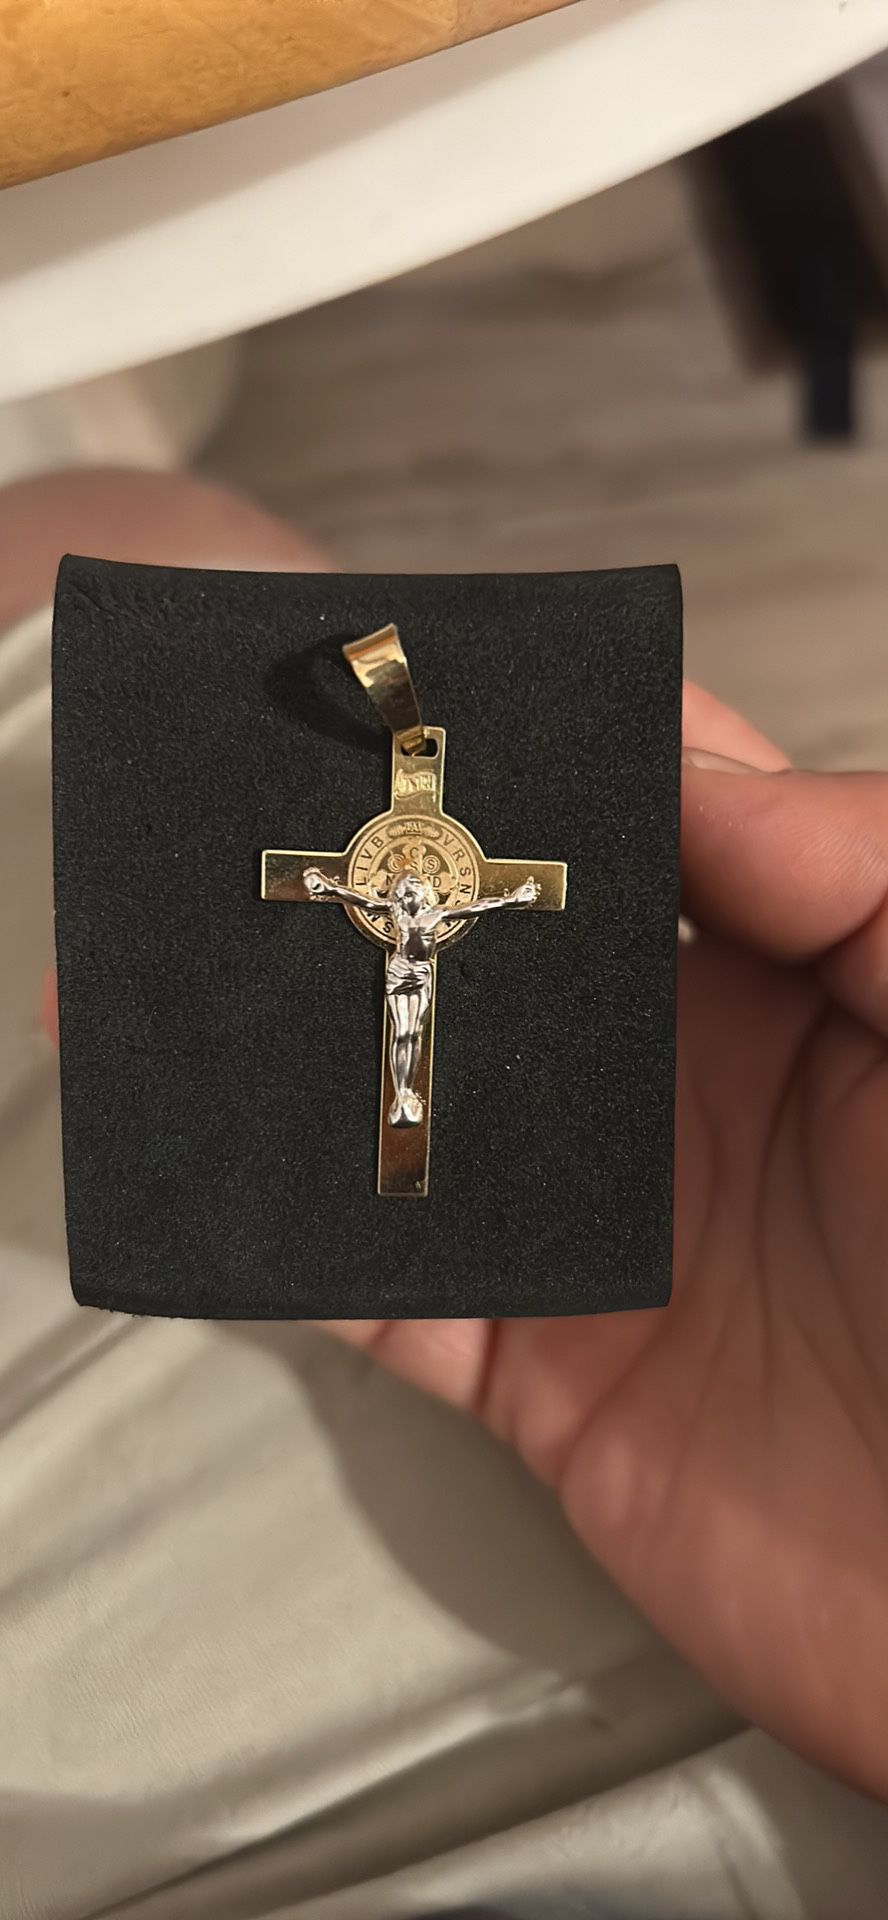 10k Jesus Crucifix Pendant 